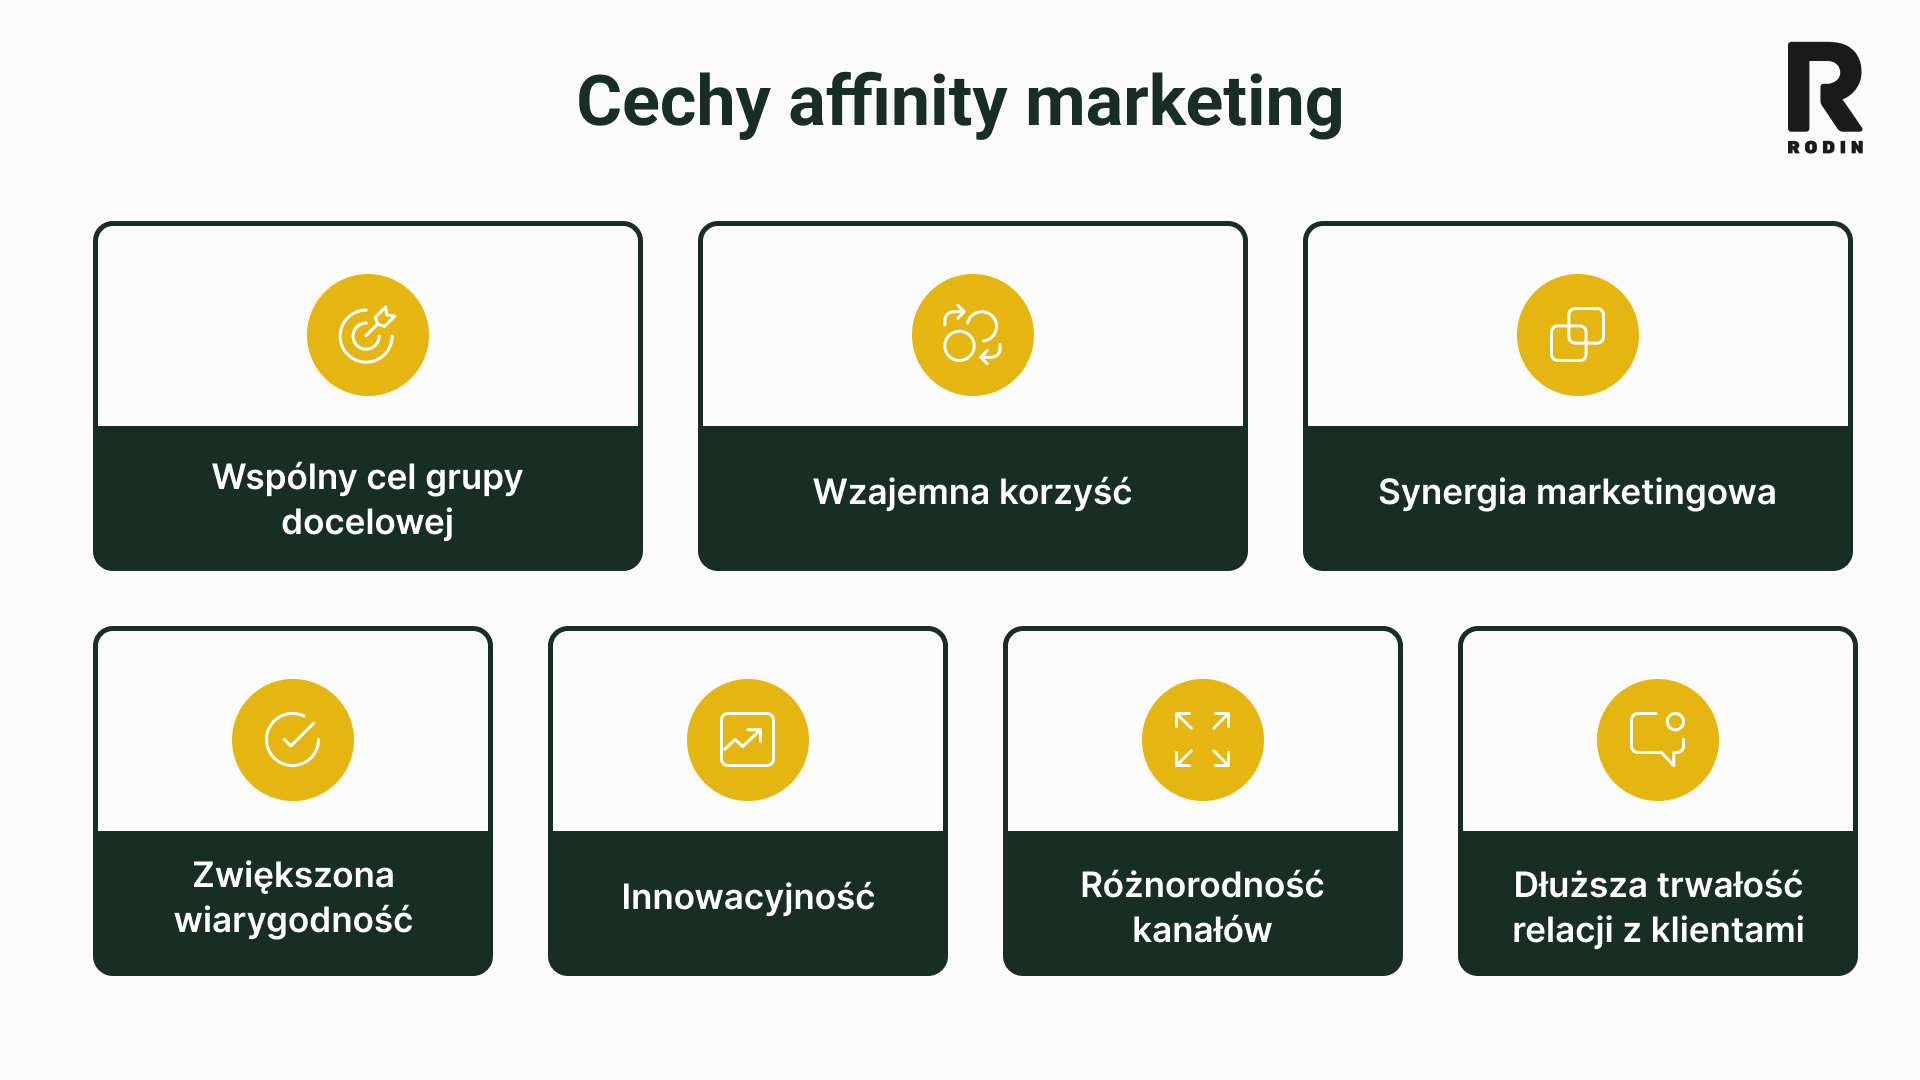 Cechy affinity marketing